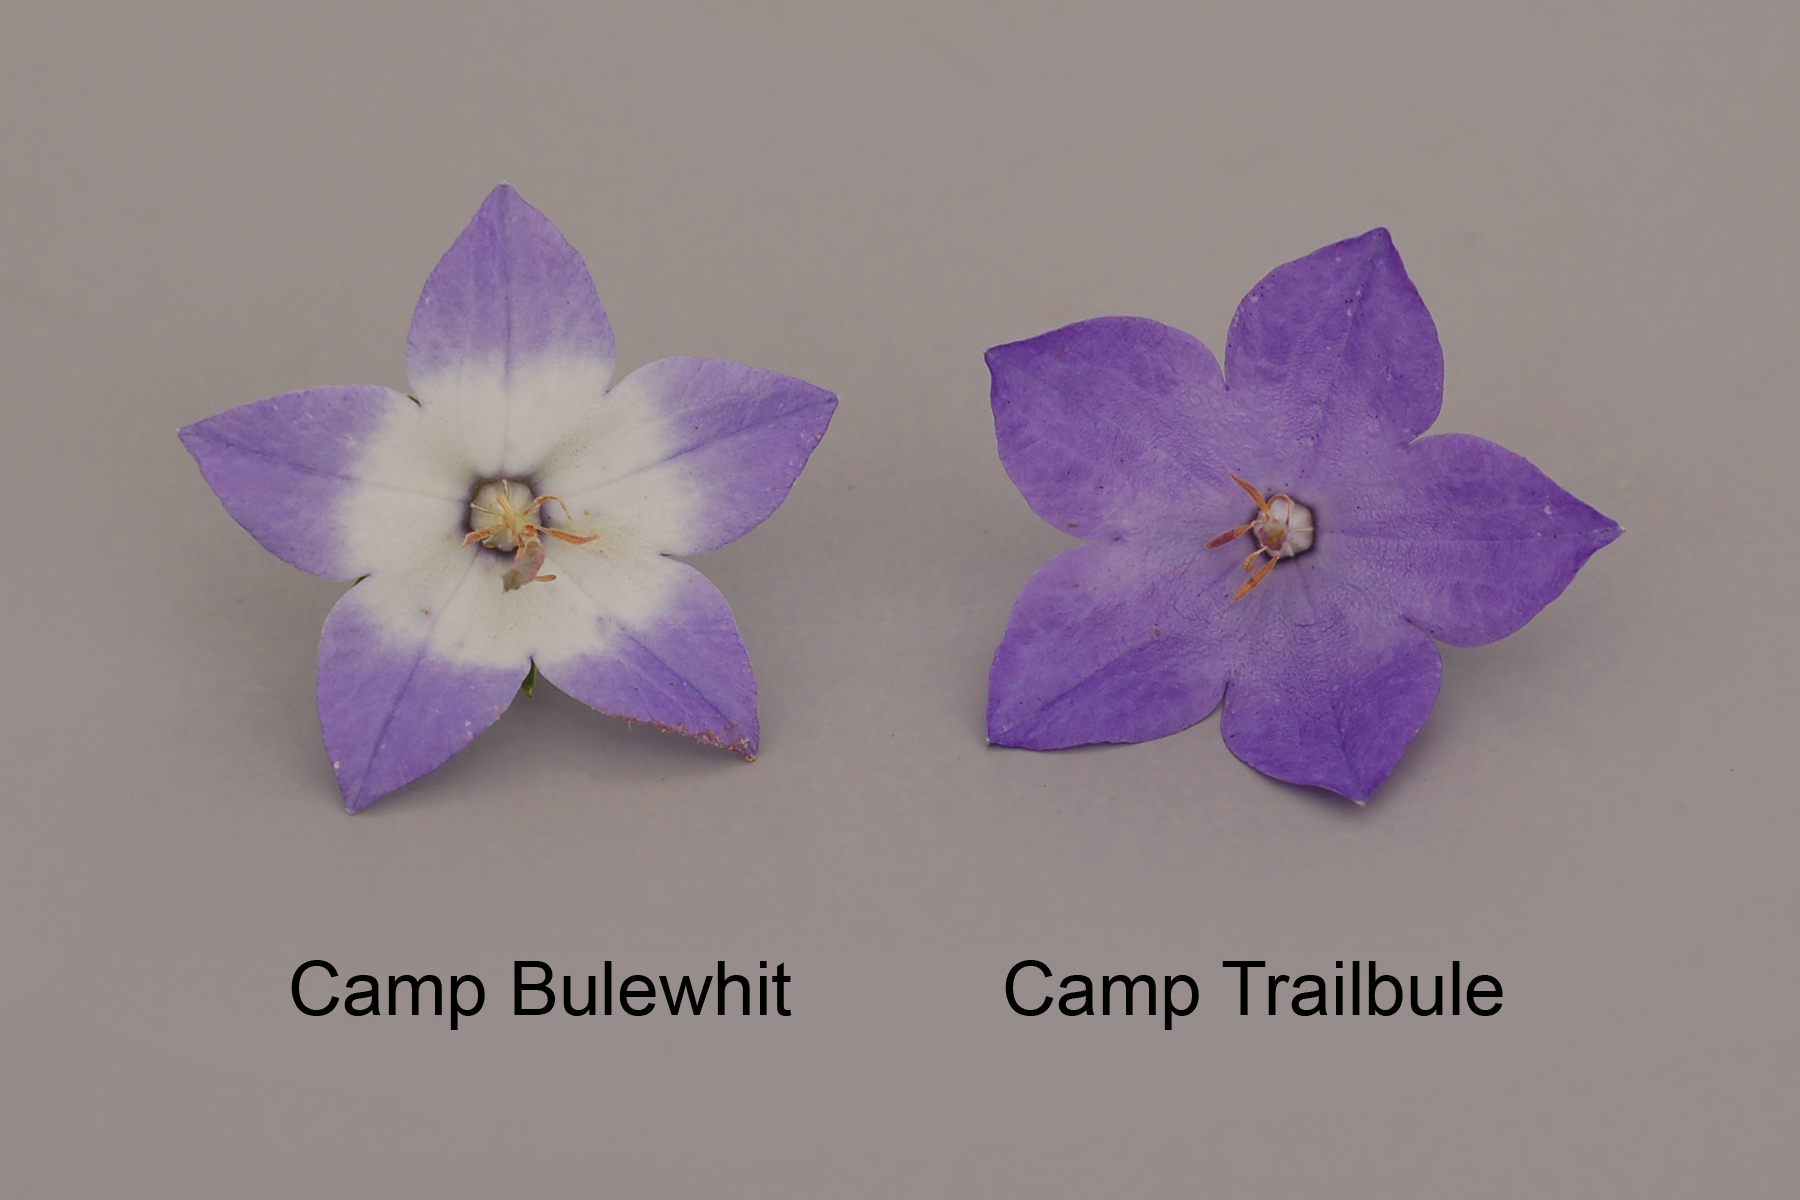 Camp Bulewhit